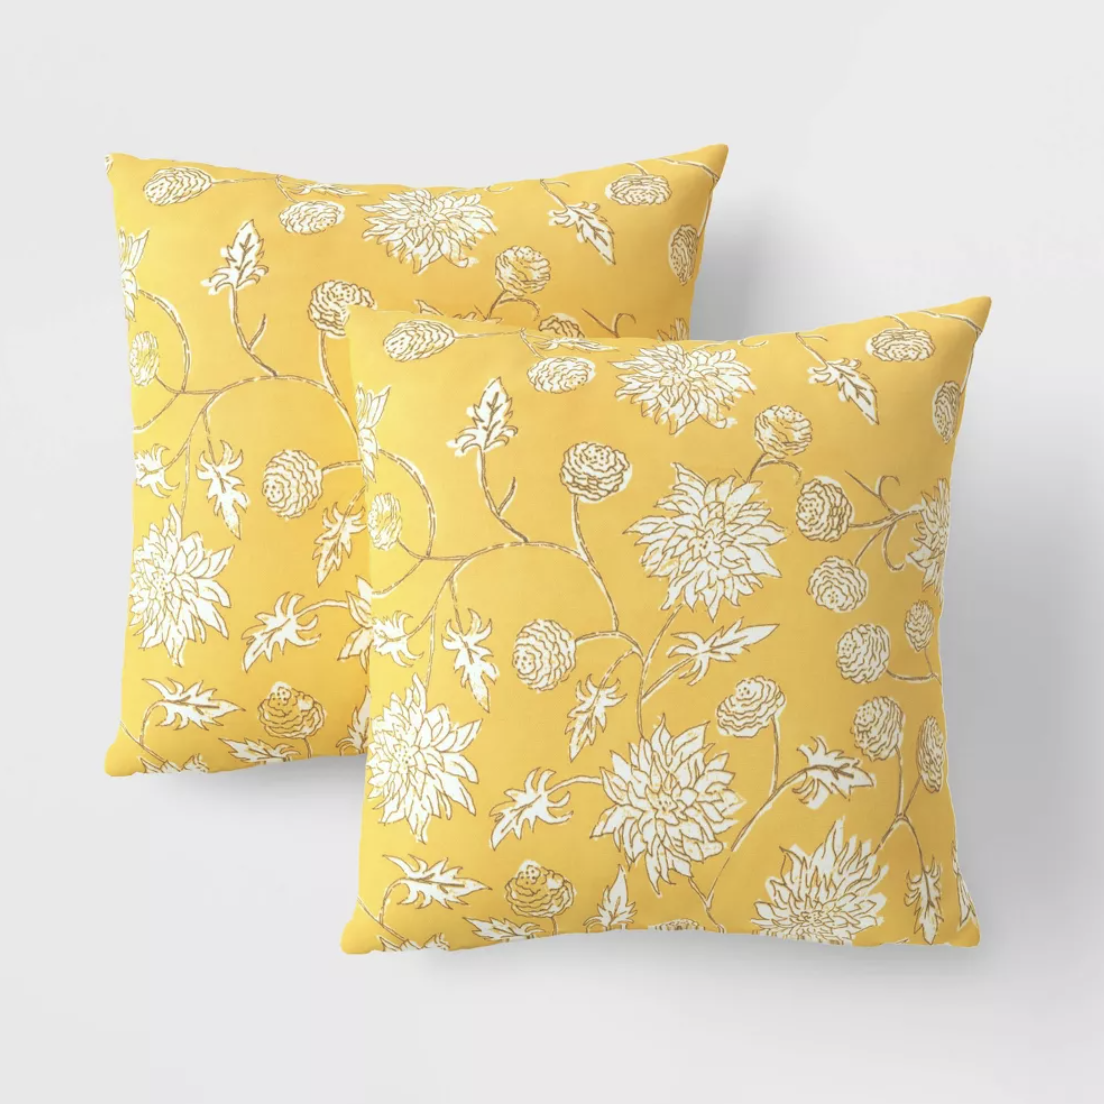 Target - $40 - 2pk DuraSeason Fabric™ Outdoor Throw Pillow